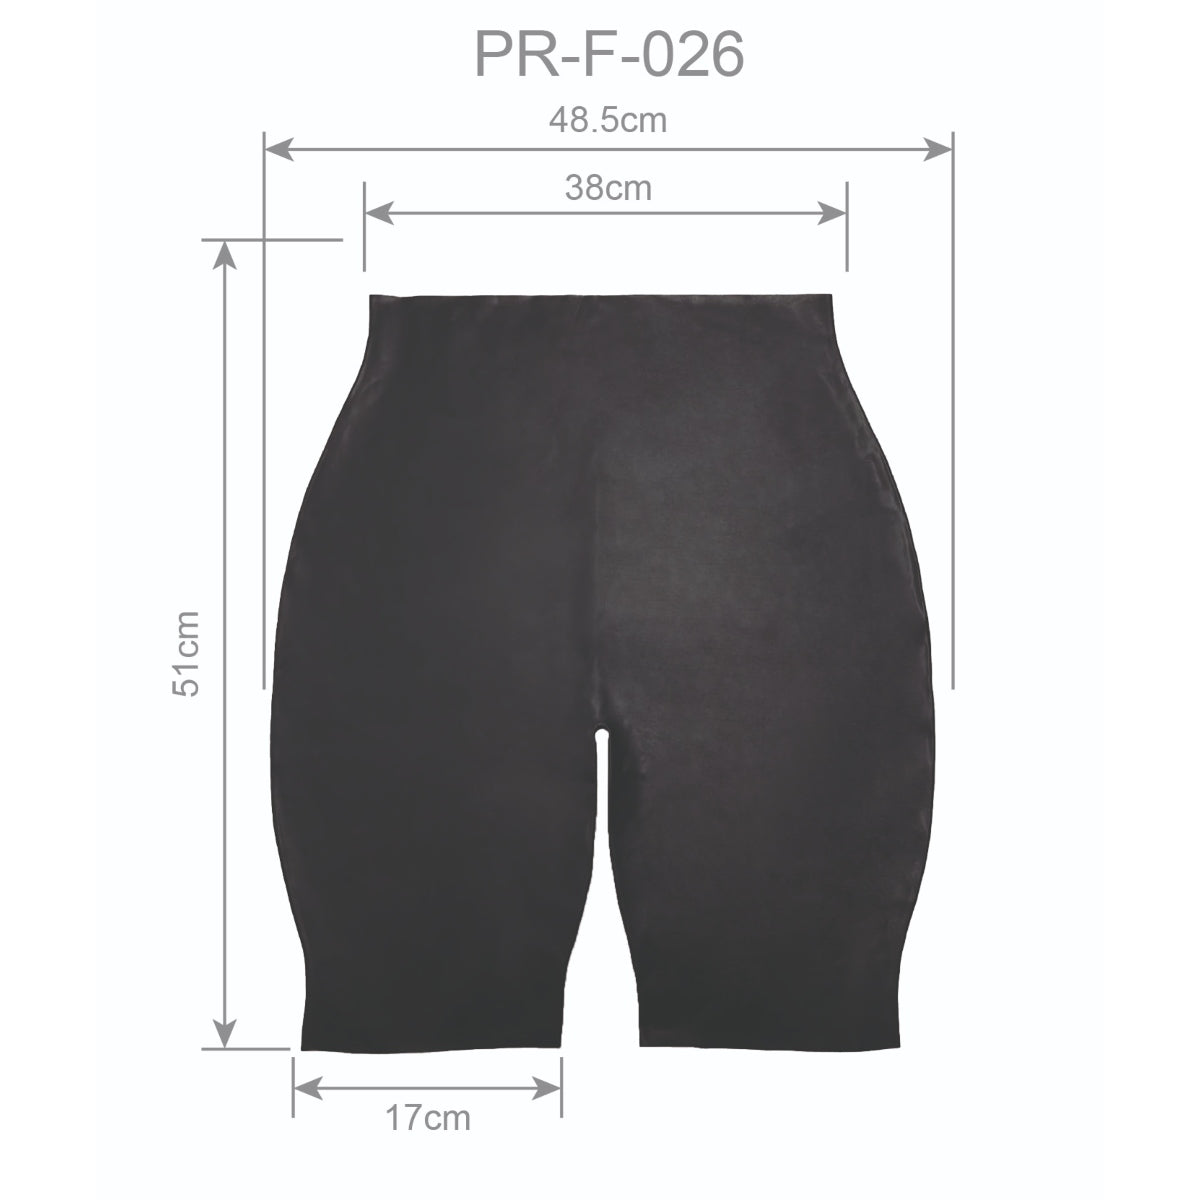 Prowler RED Latex Shorts Black XL